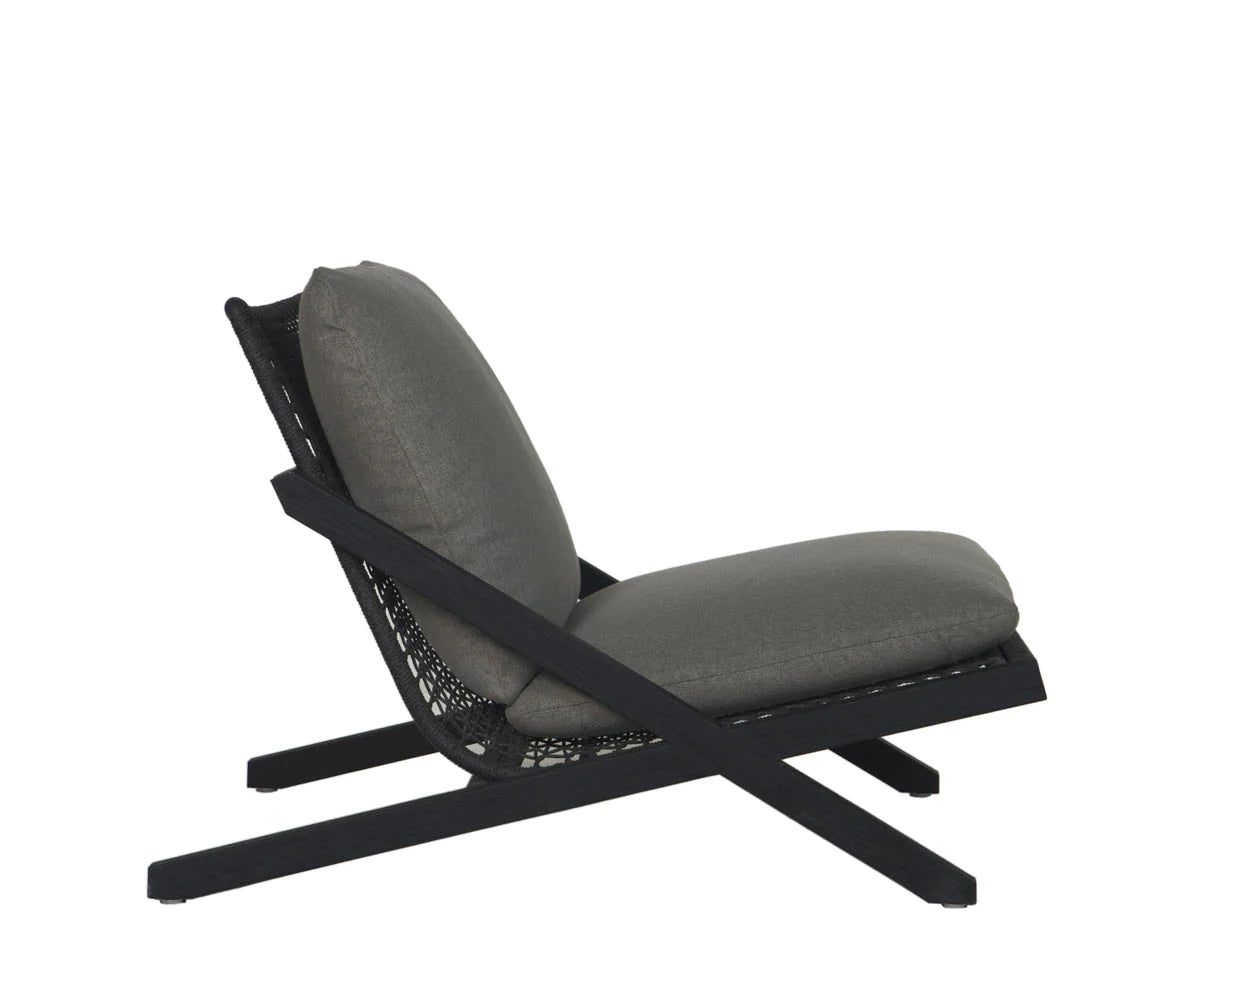 Bari Lounge Chair - Gracebay Grey - Charcoal (Patio/Outdoor)